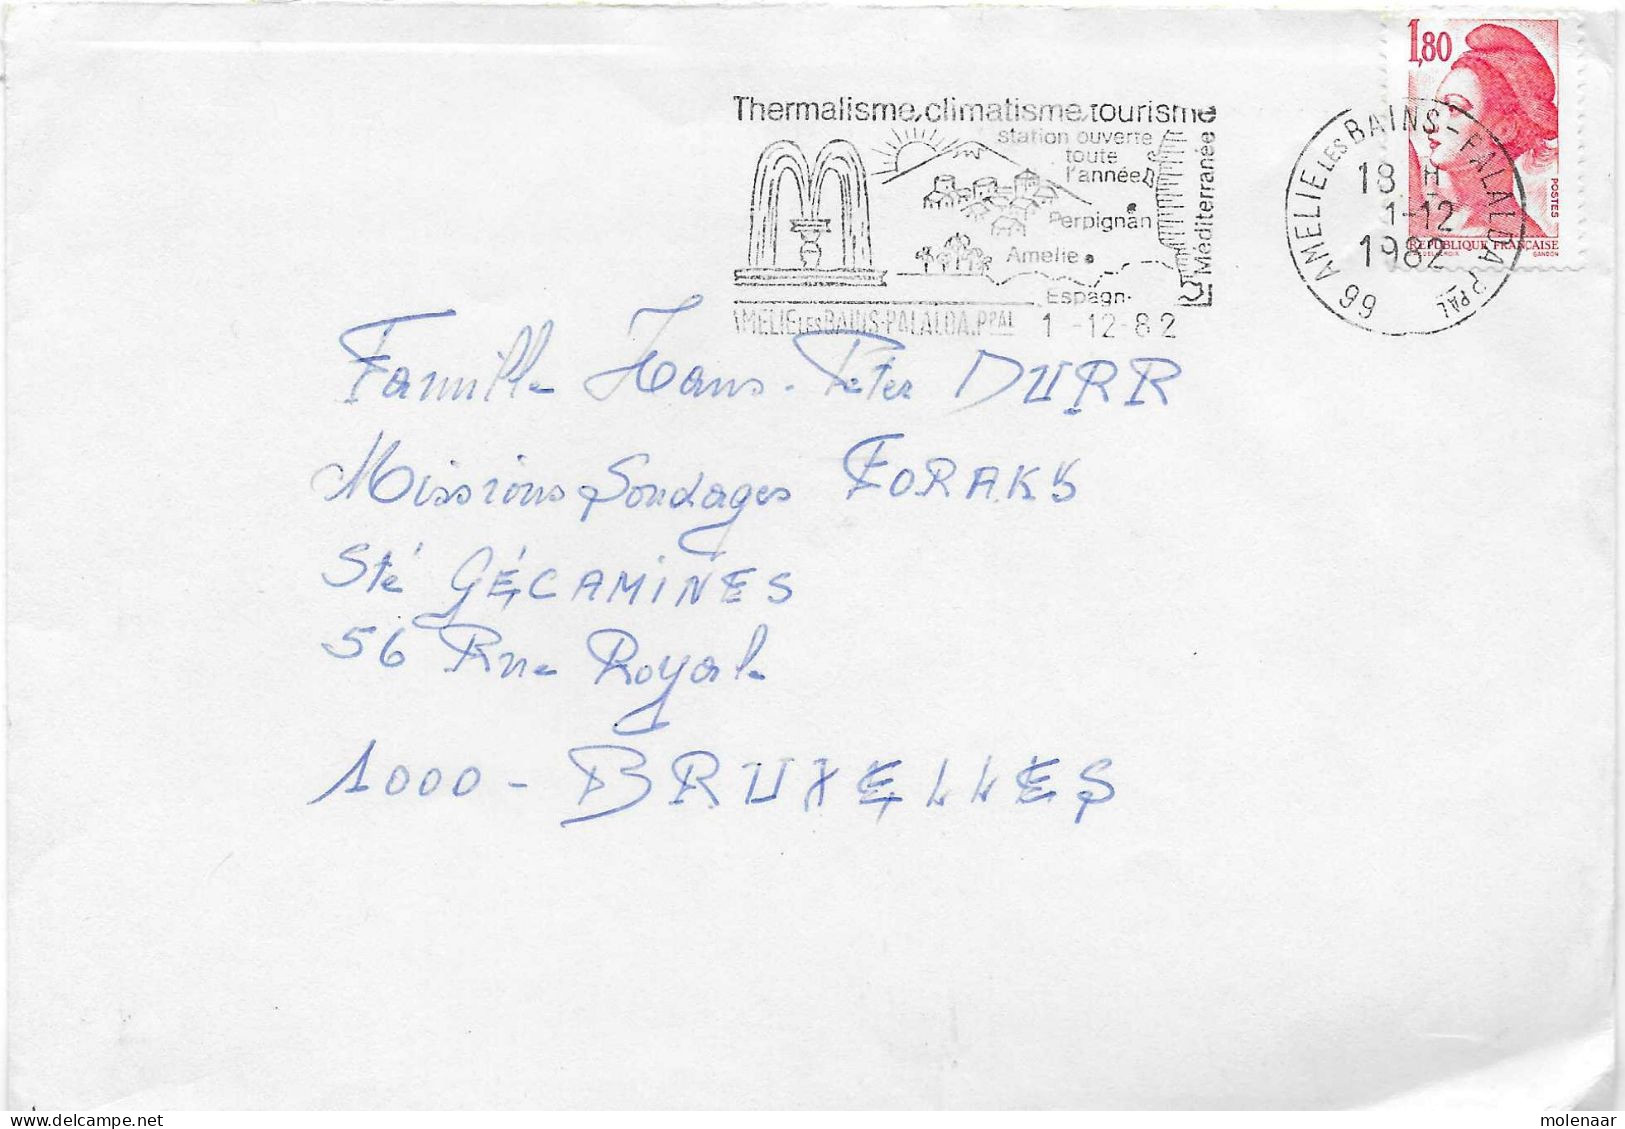 Postzegels > Europa > Frankrijk > 1945-.... > 1980-1989 > Brief Met No. 2131 (17417) - Covers & Documents